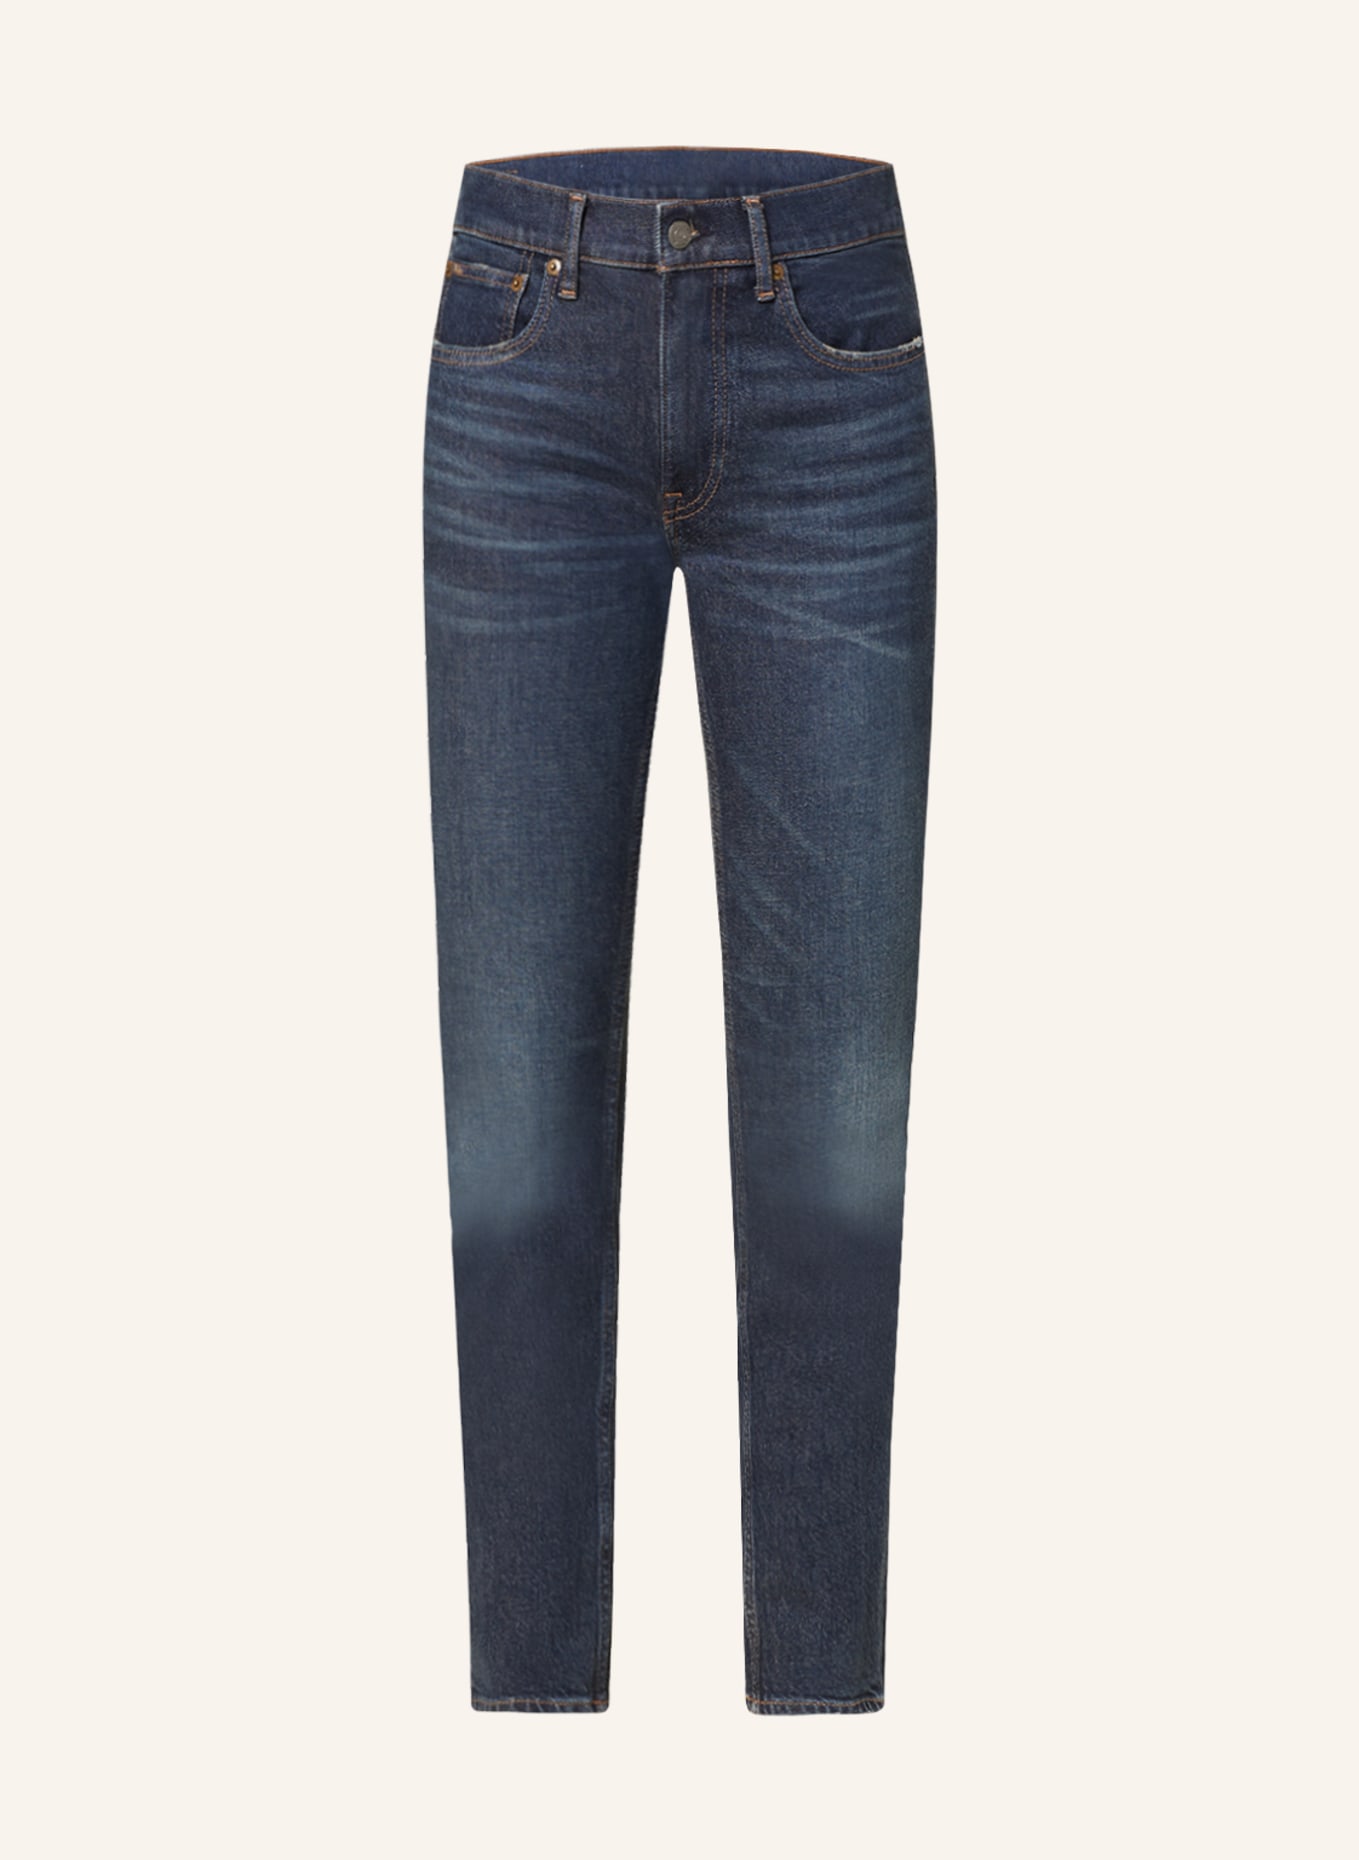 POLO RALPH LAUREN Skinny Jeans, Farbe: 001 CELEBES WASH (Bild 1)